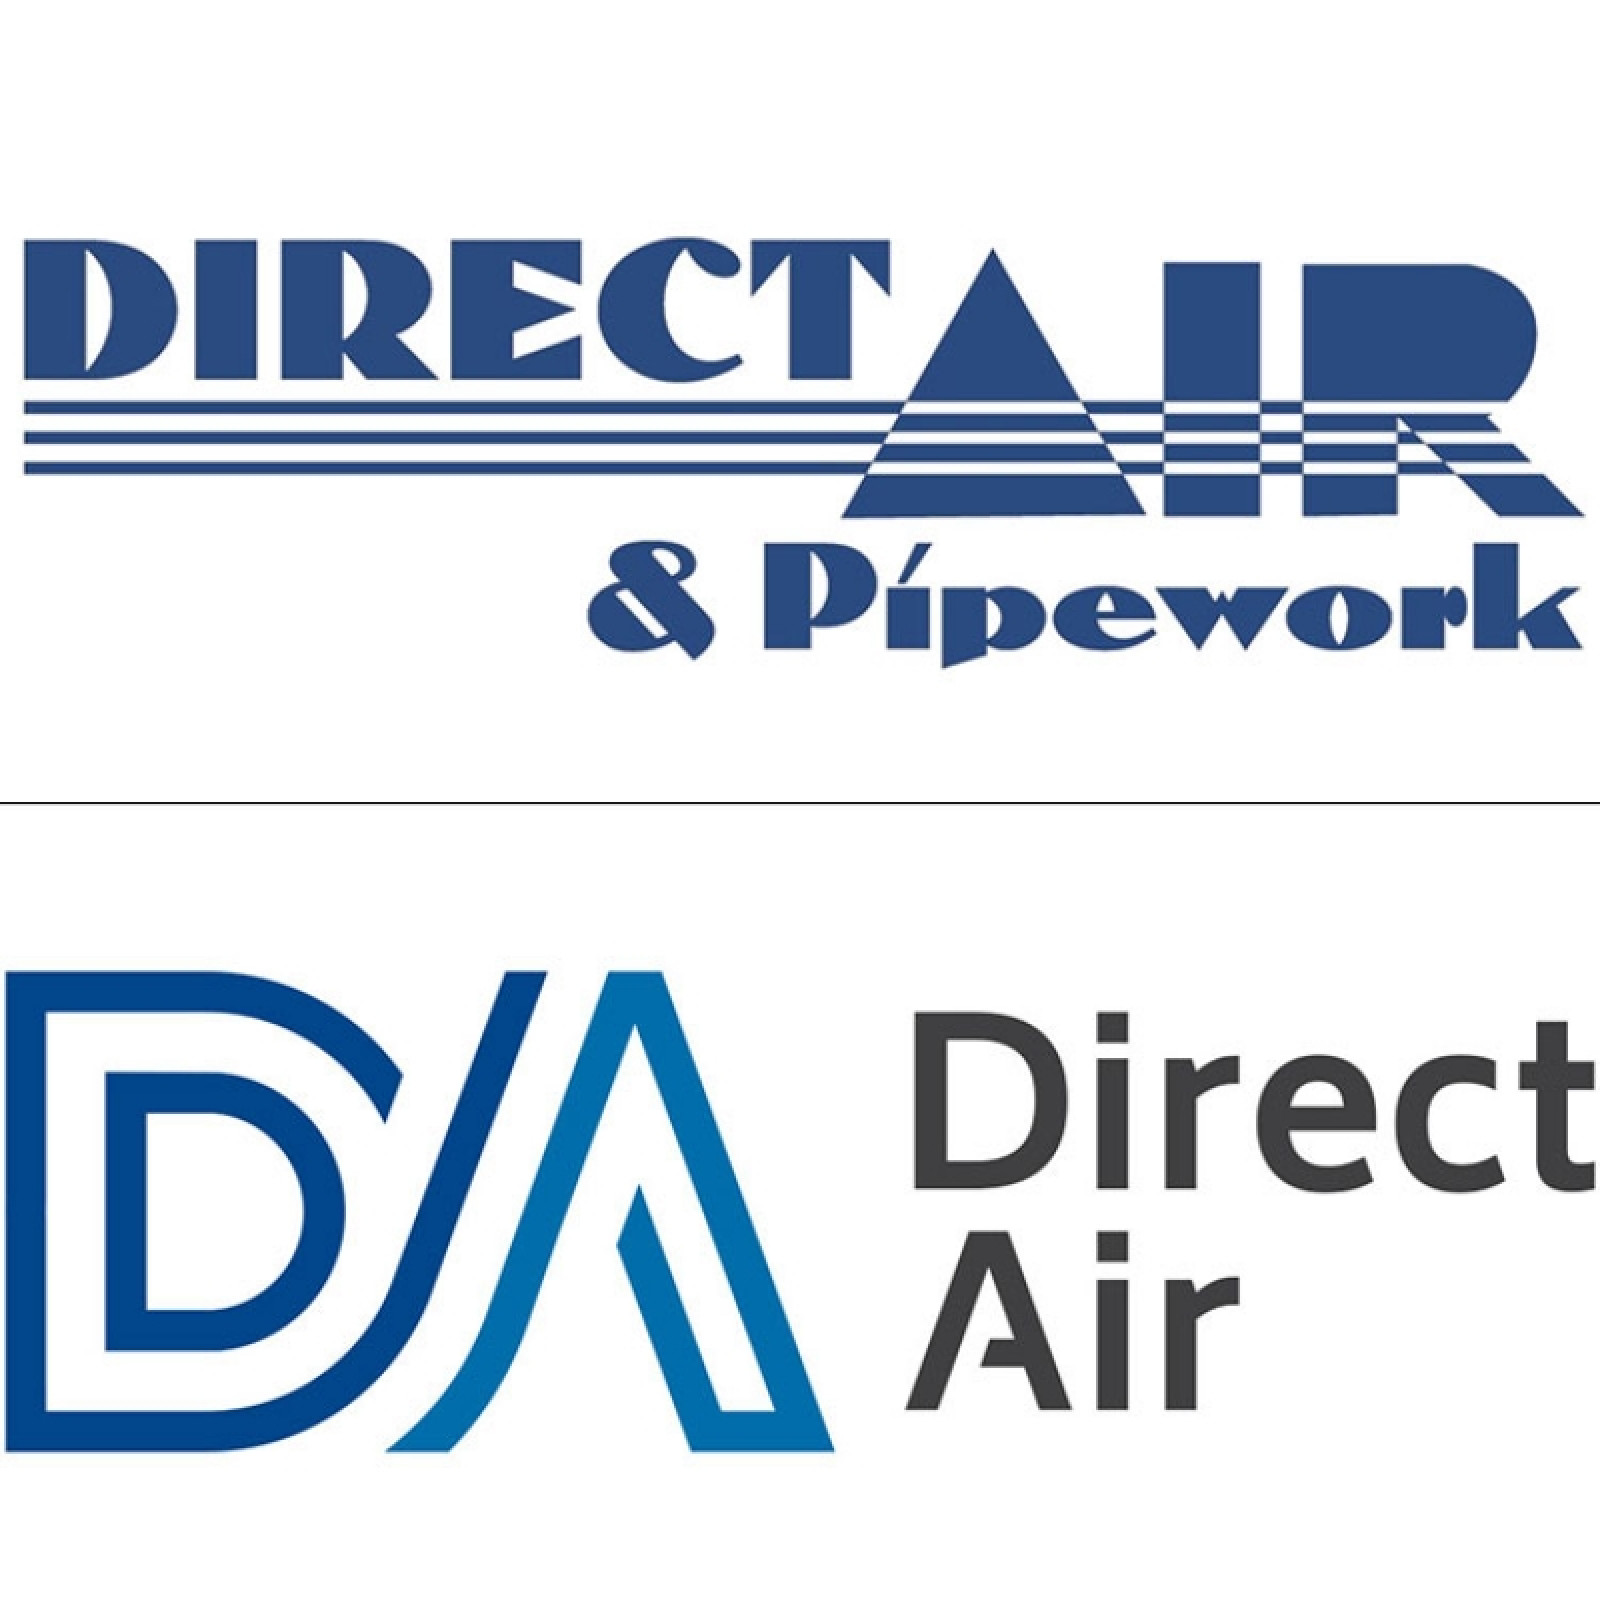 Direct Air rebrand to celebrate 25th anniversary